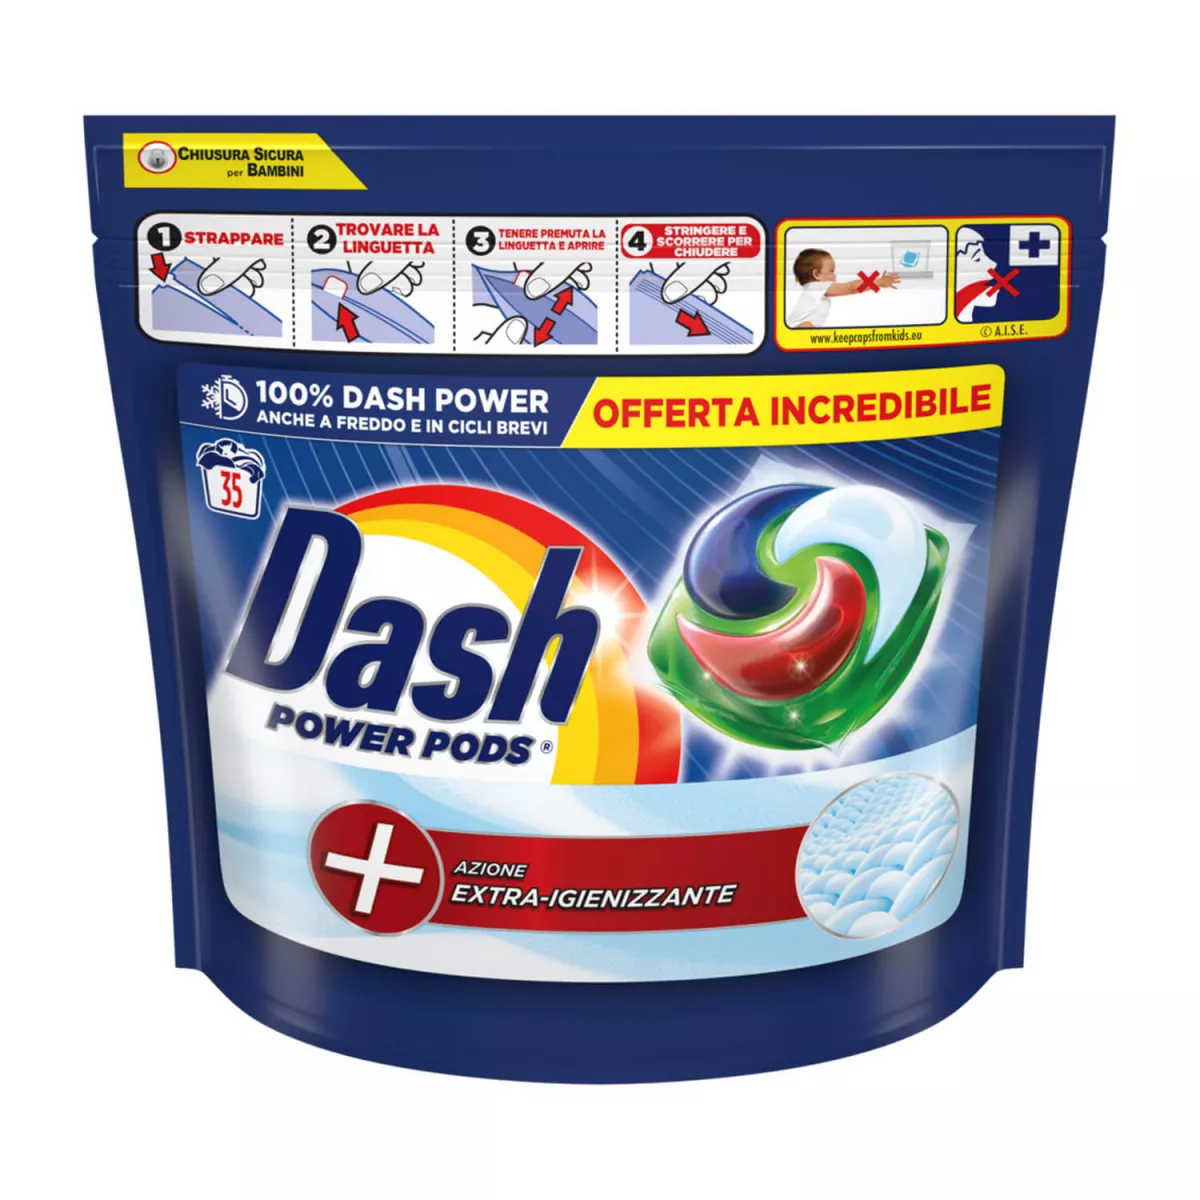 Pernute Dash Power Pods Extra- Igienizzante